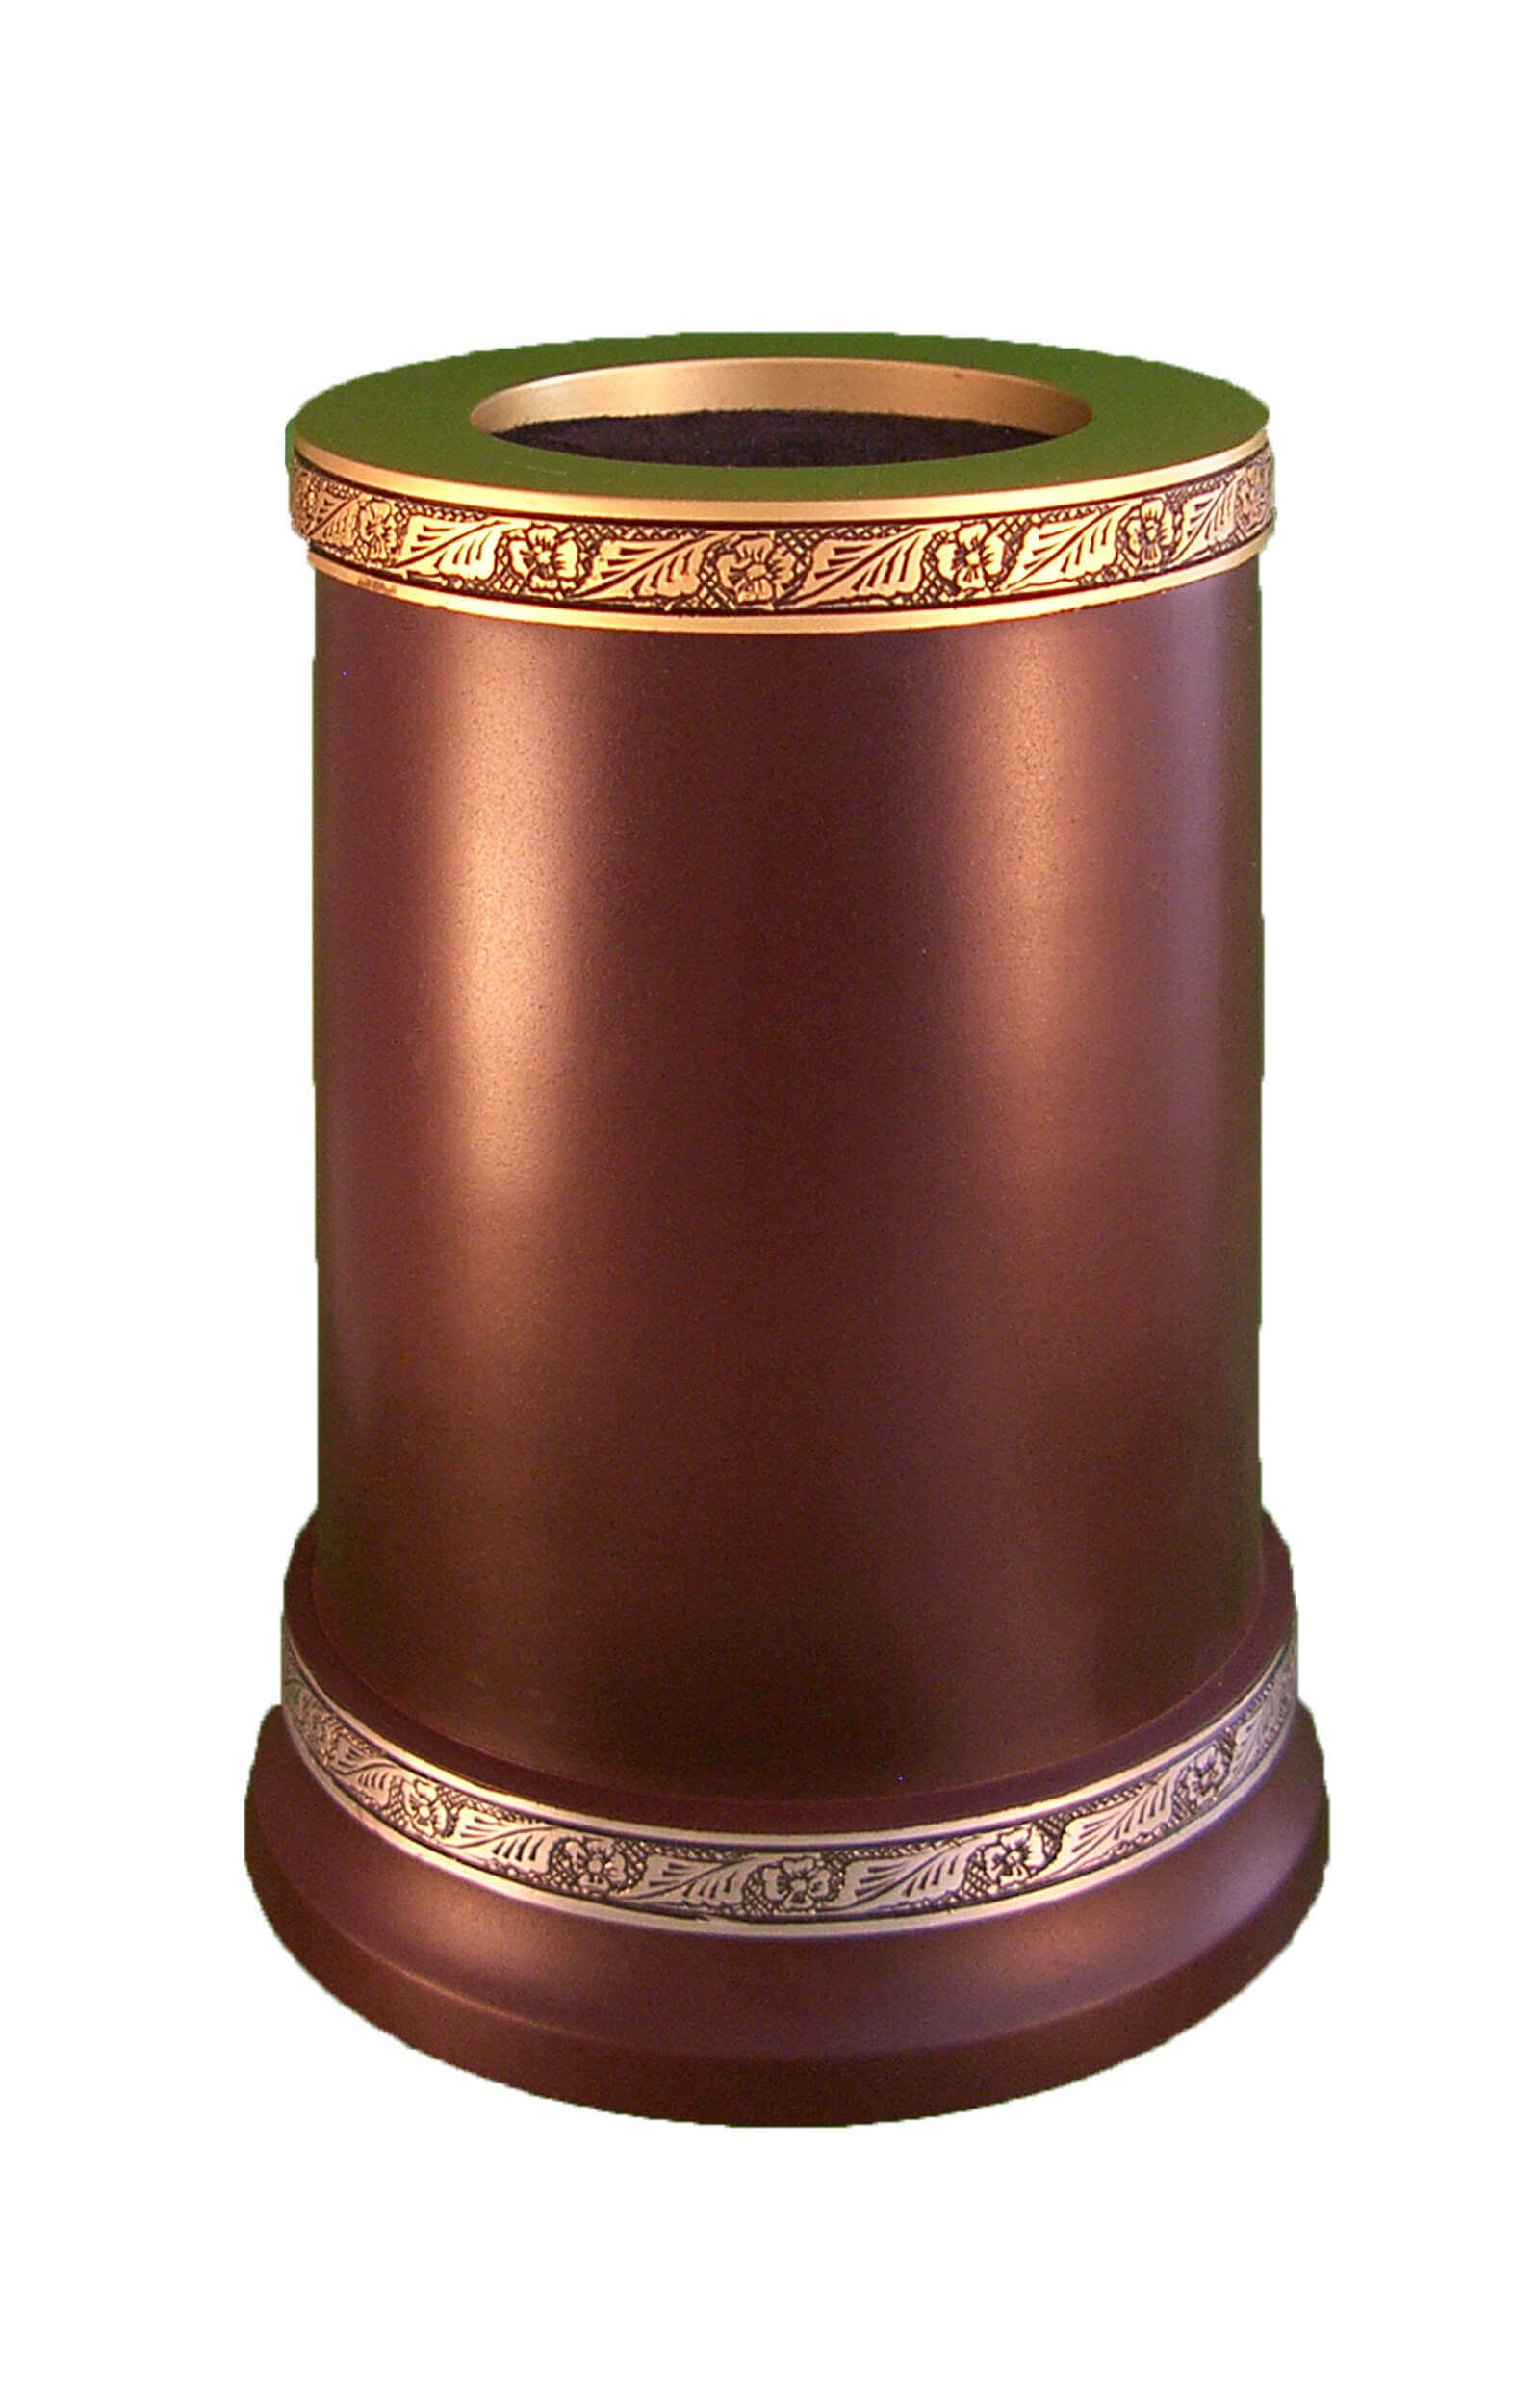 en TIB968 penny brown and gold pet urn.jpg